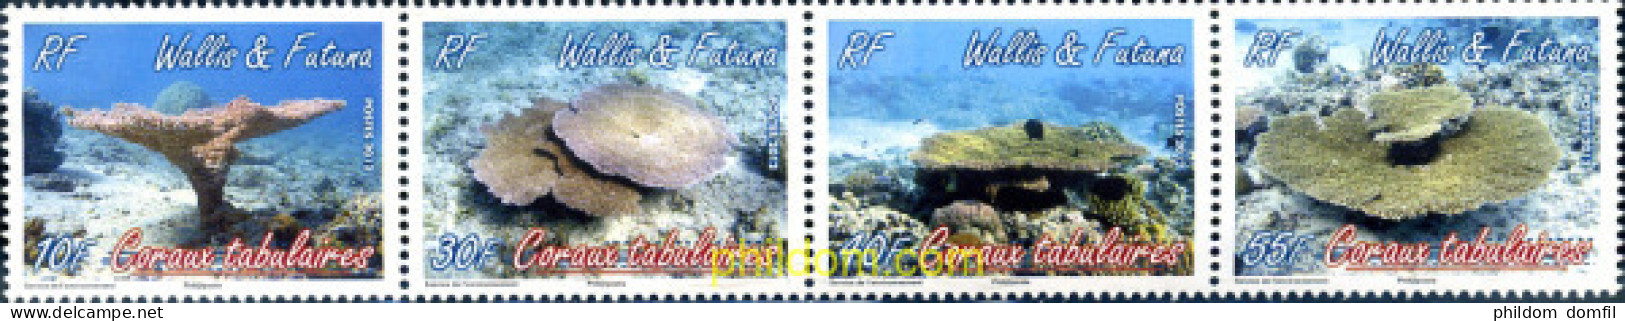 287027 MNH WALLIS Y FUTUNA 2012 - Unused Stamps